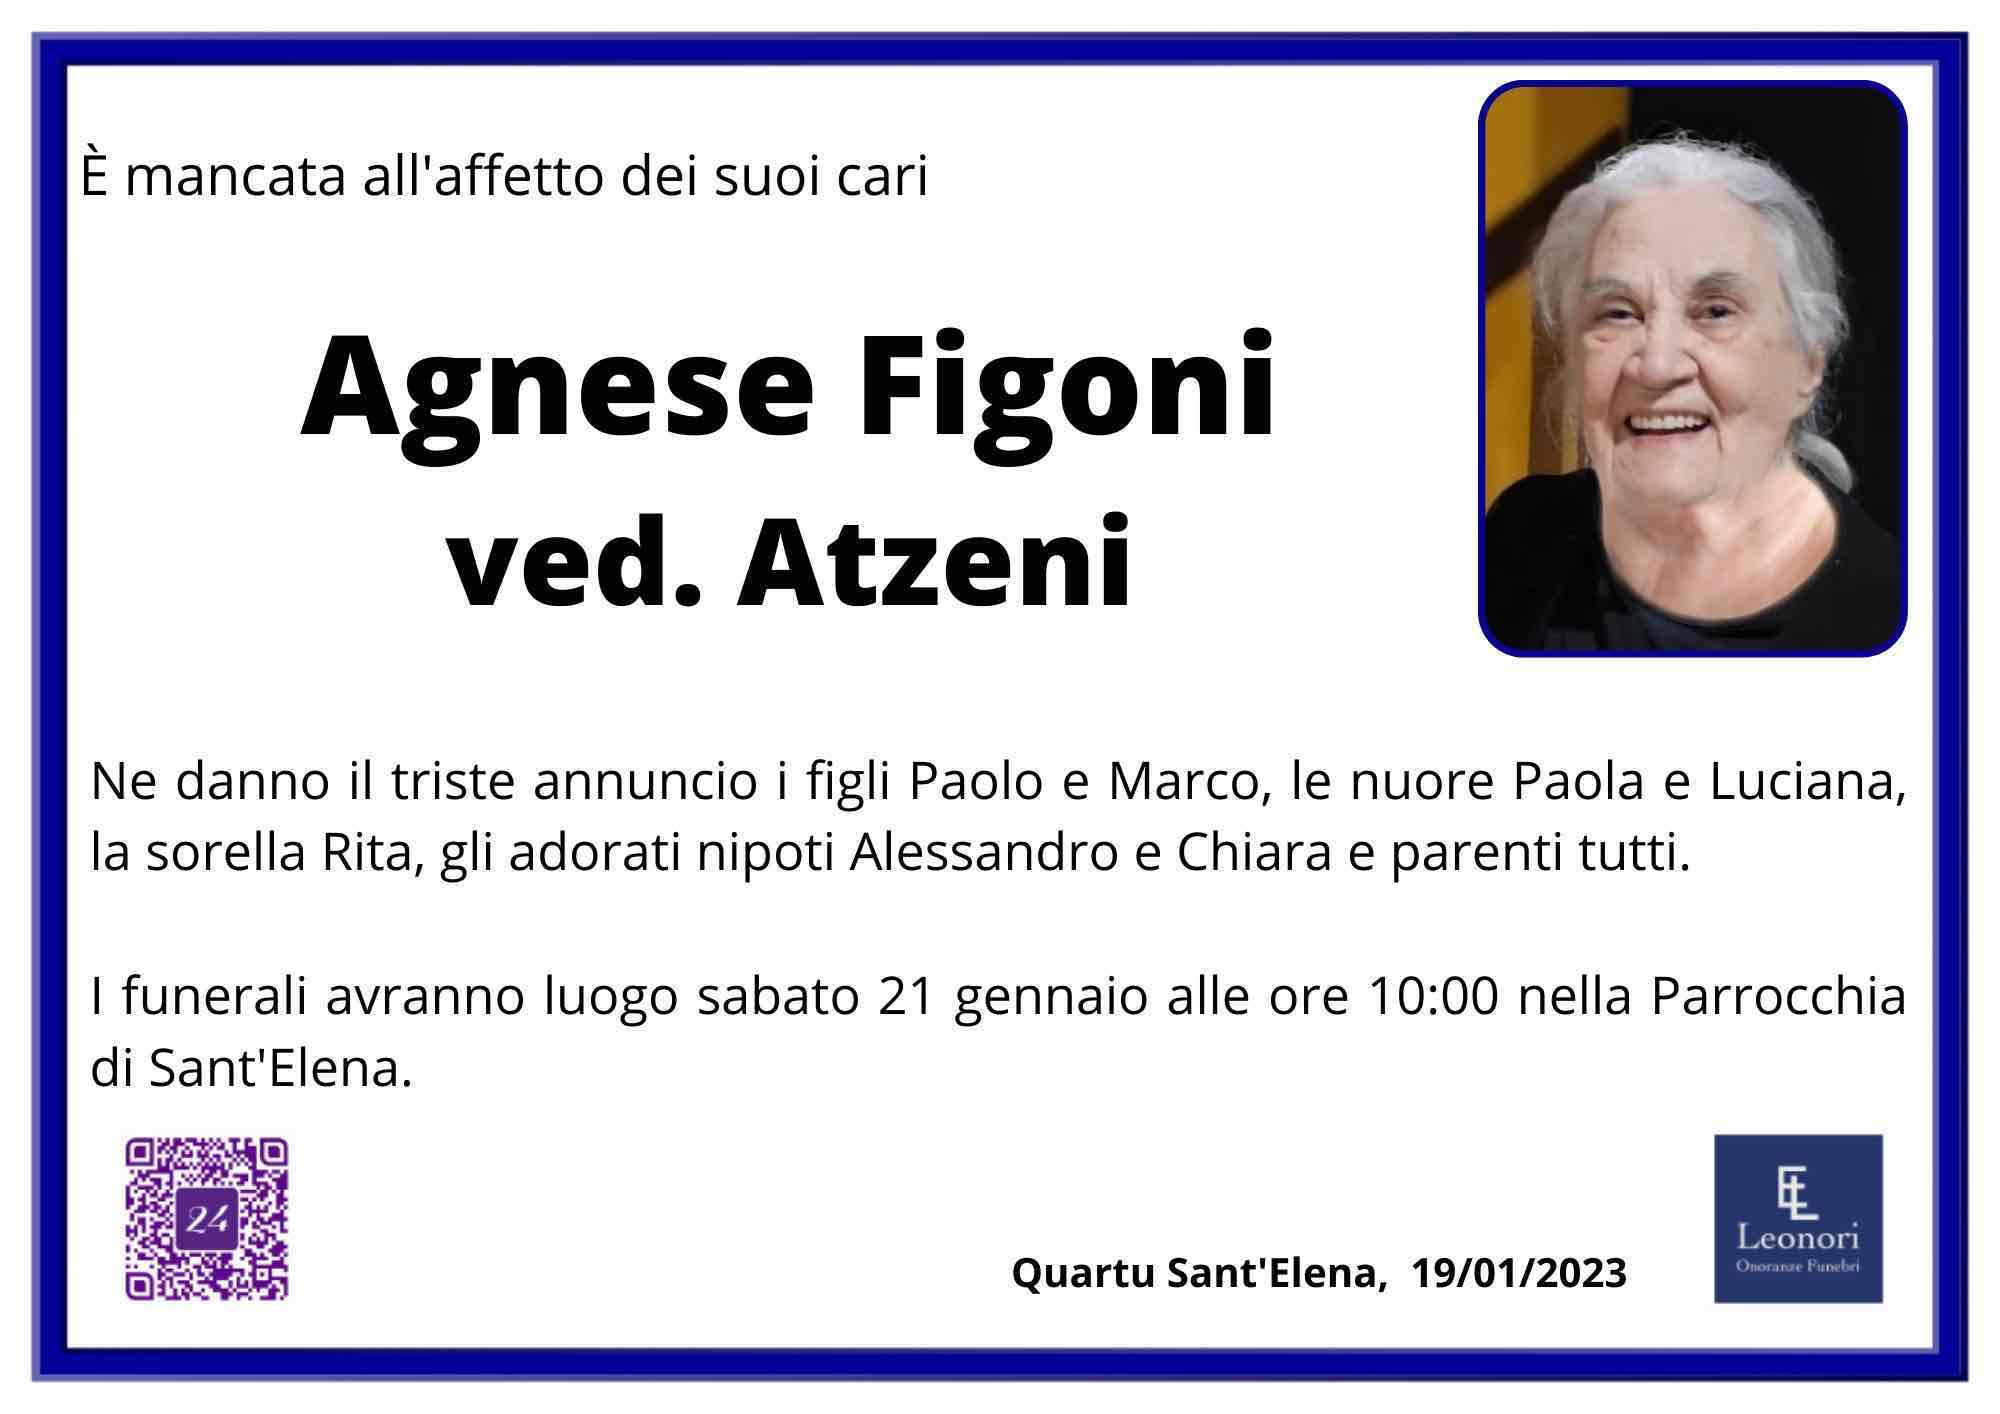 Agnese Figoni